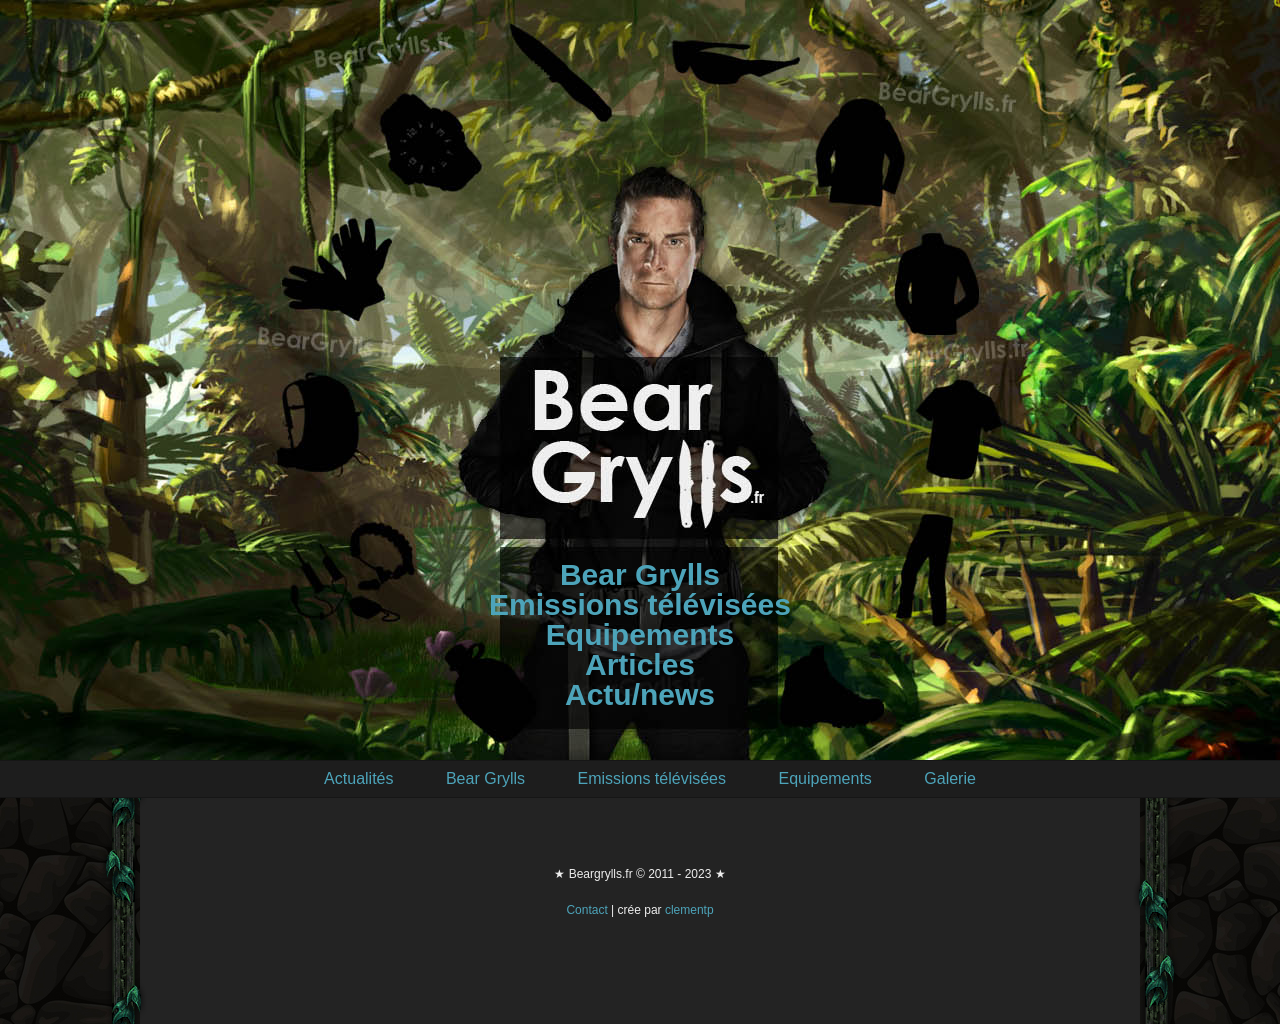 www.beargrylls.fr